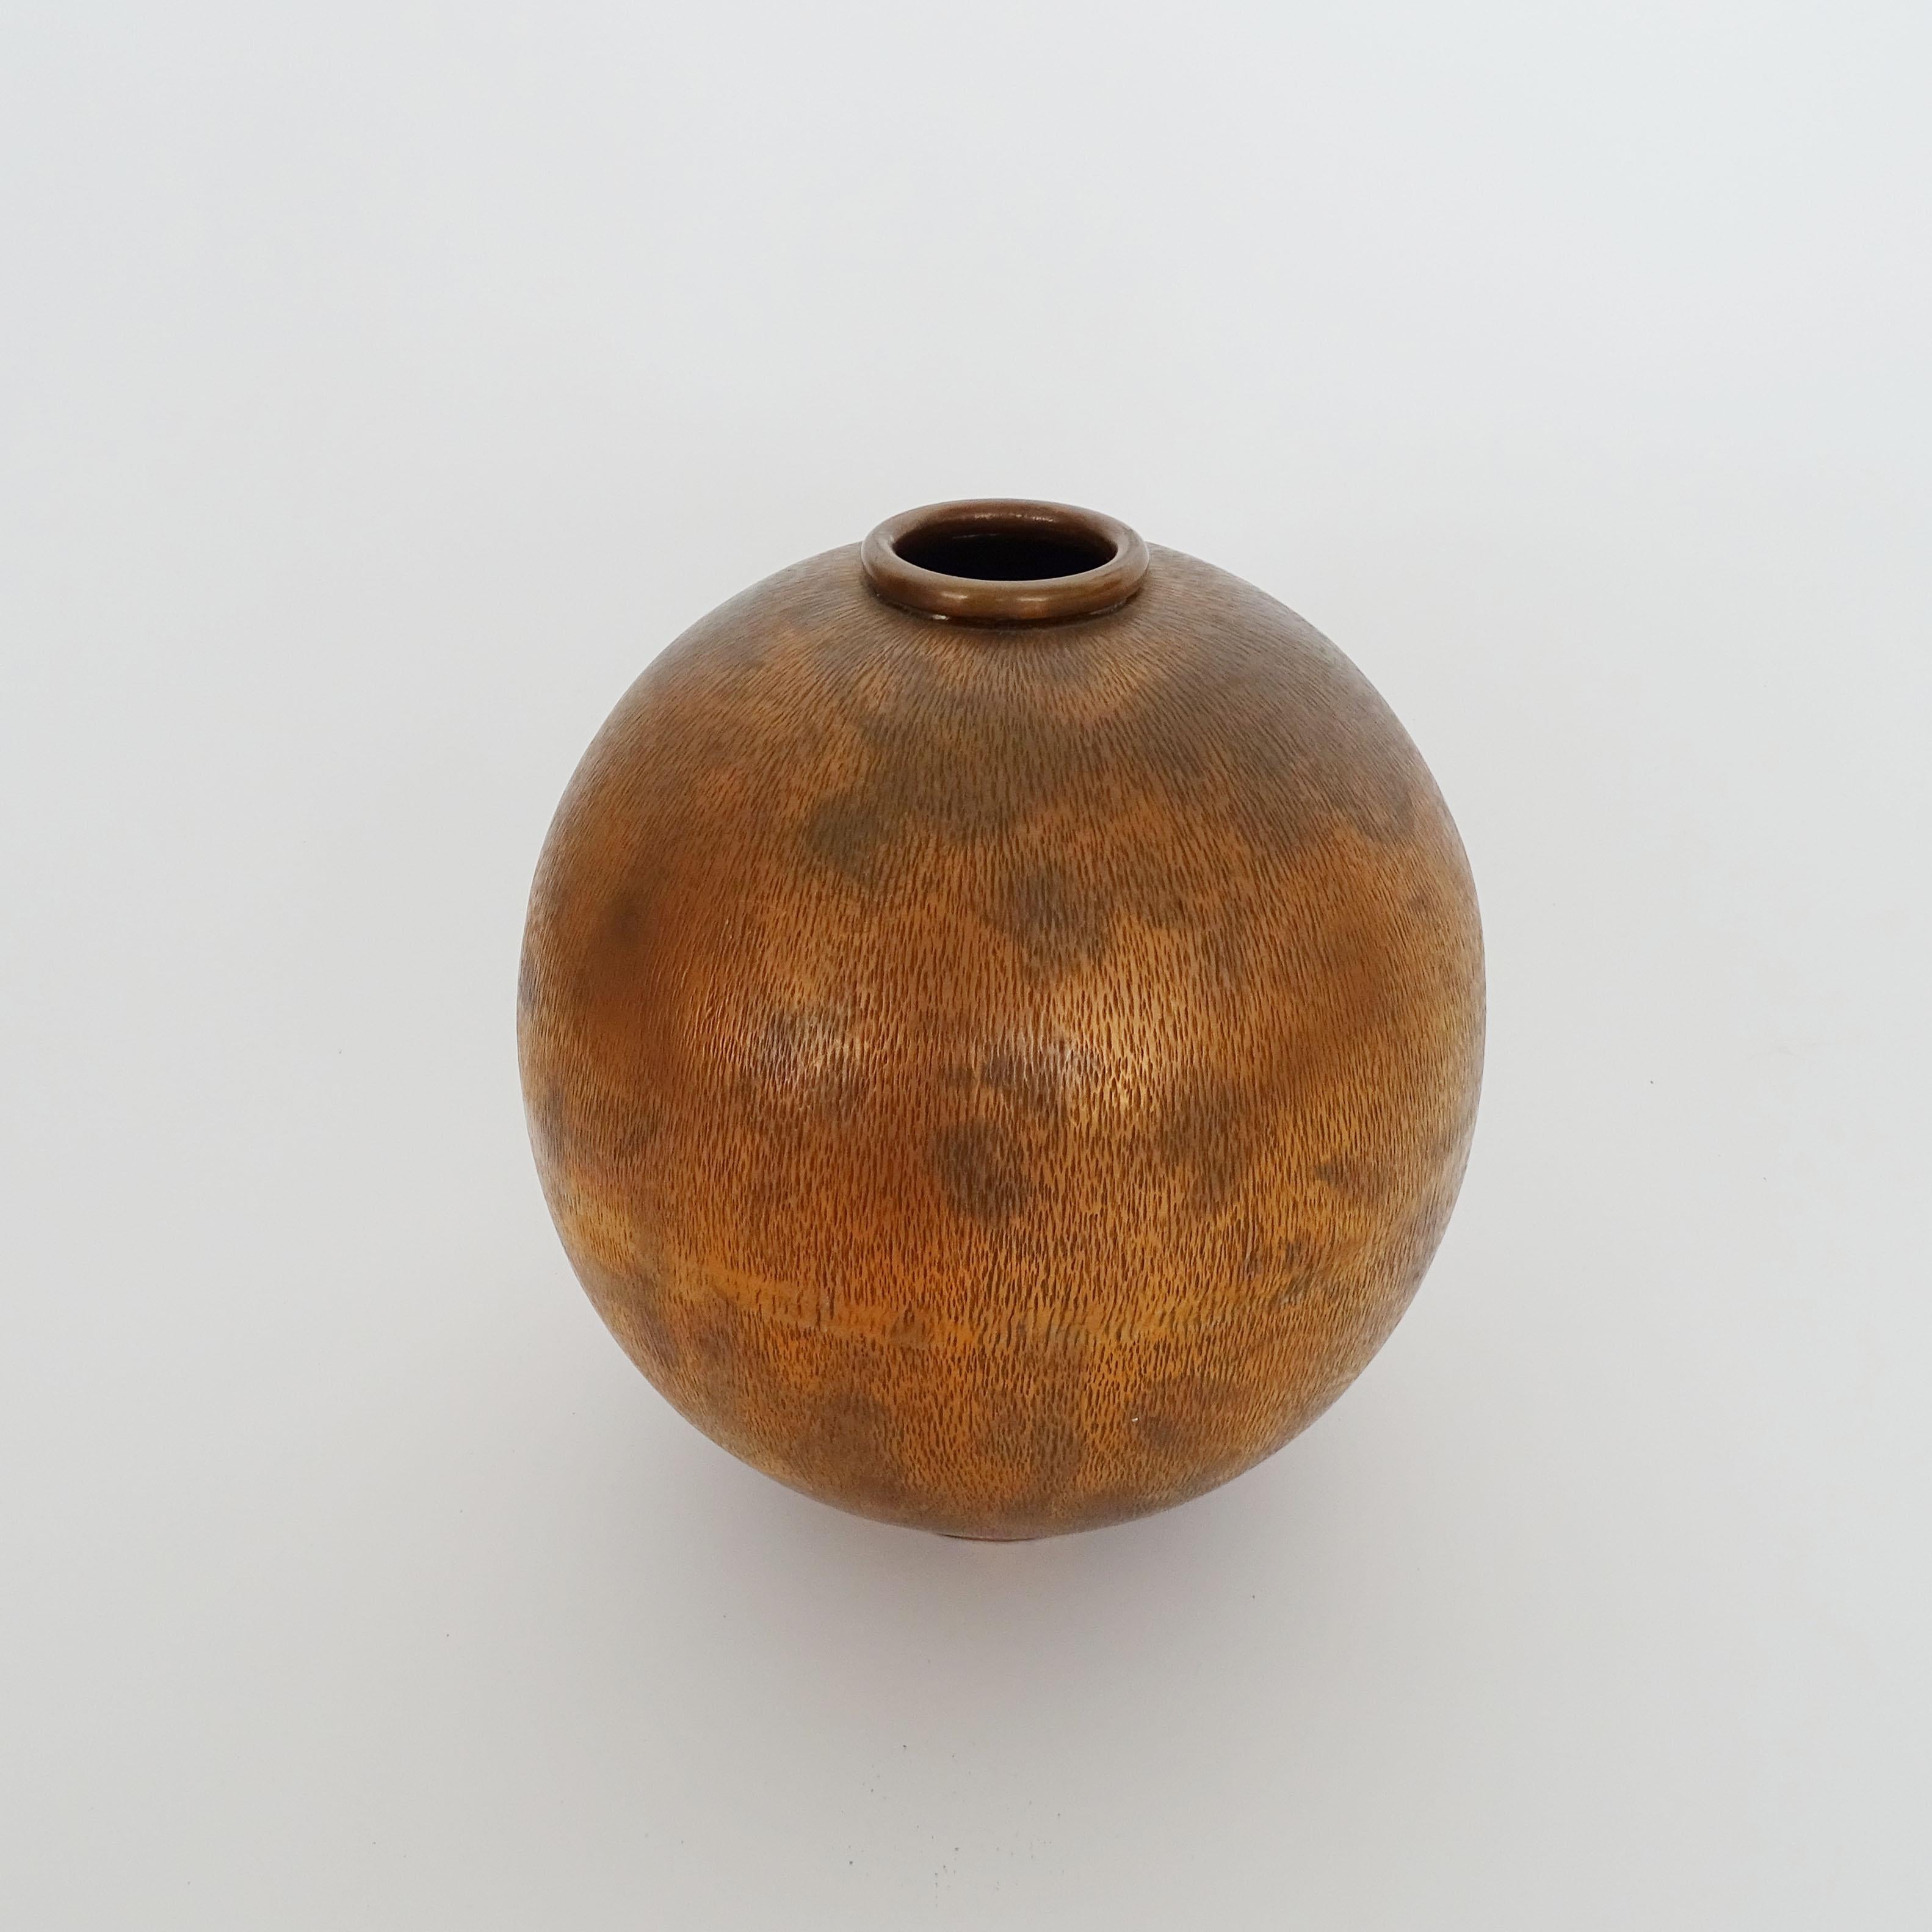 Gio Ponti for Nino Ferrari Copper Vase, Italy, 1930s 1